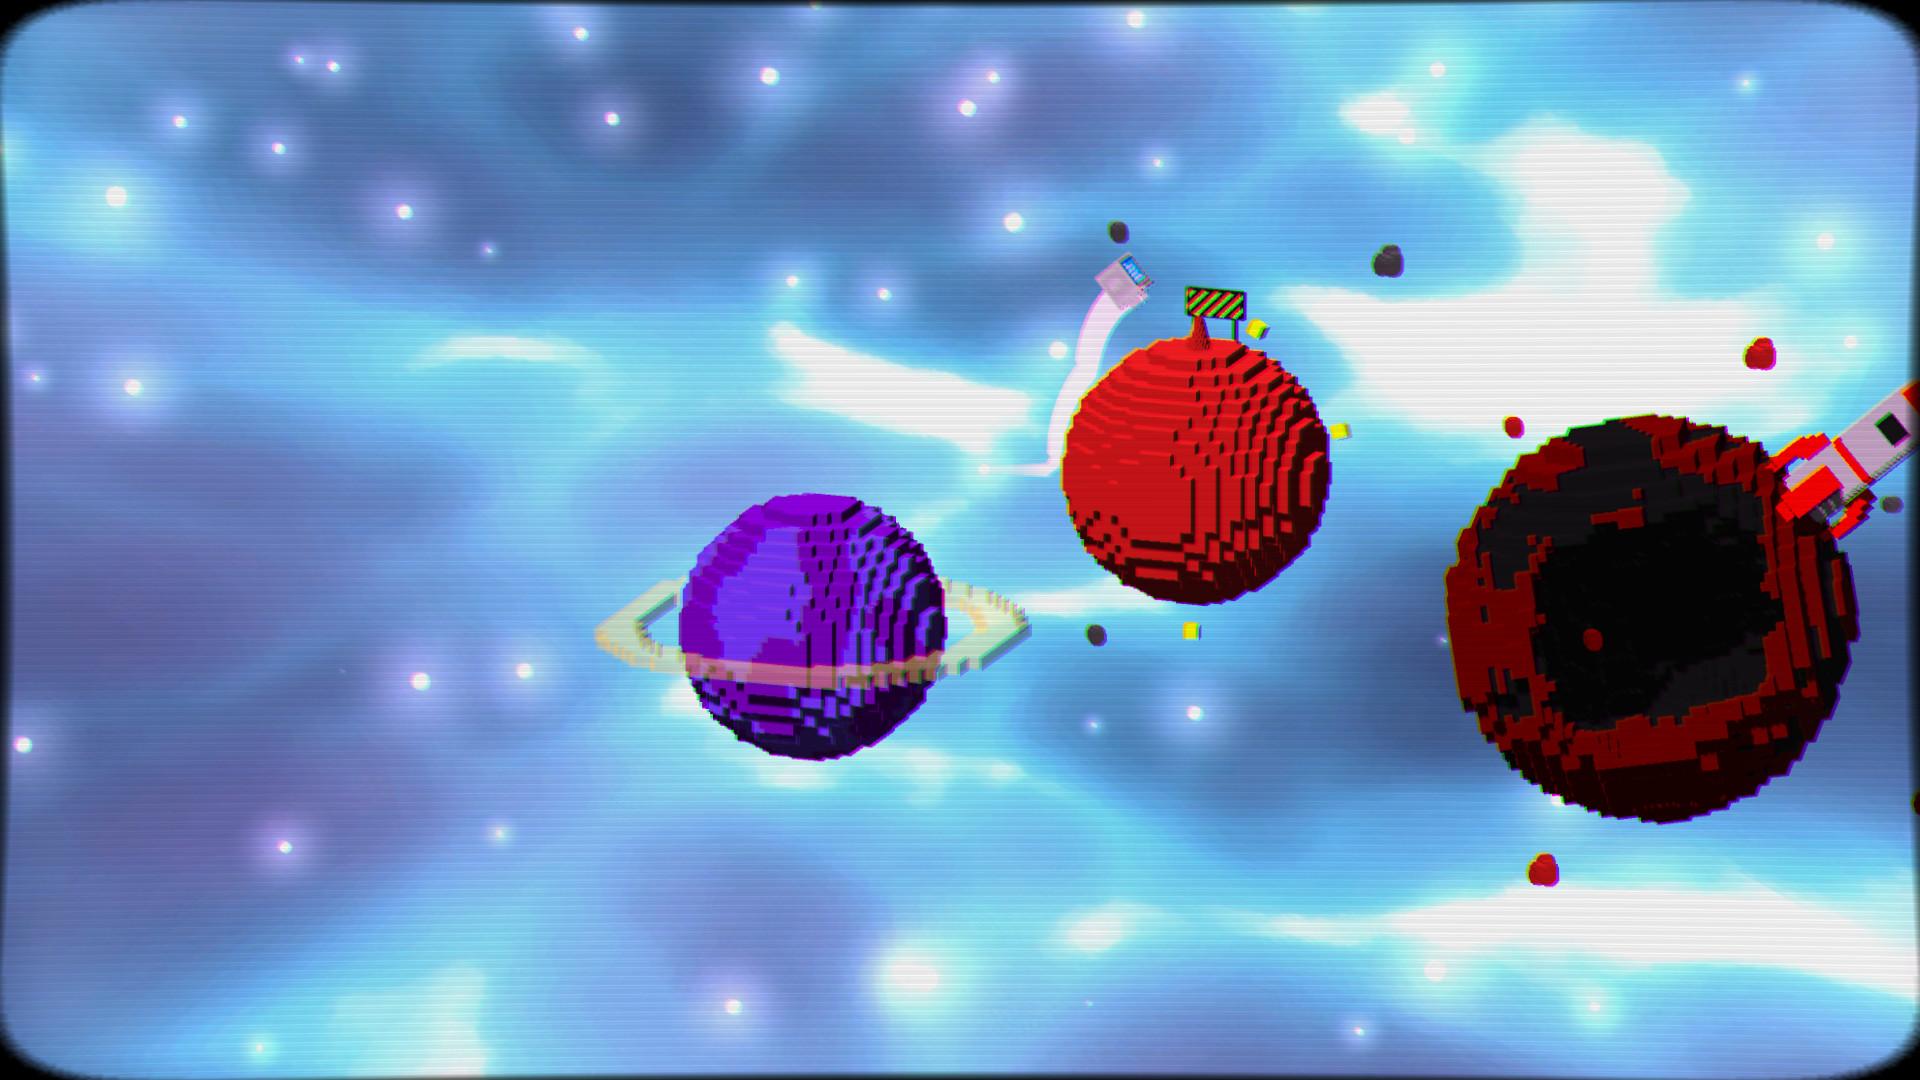 Screenshot №3 from game Cosmic Leap